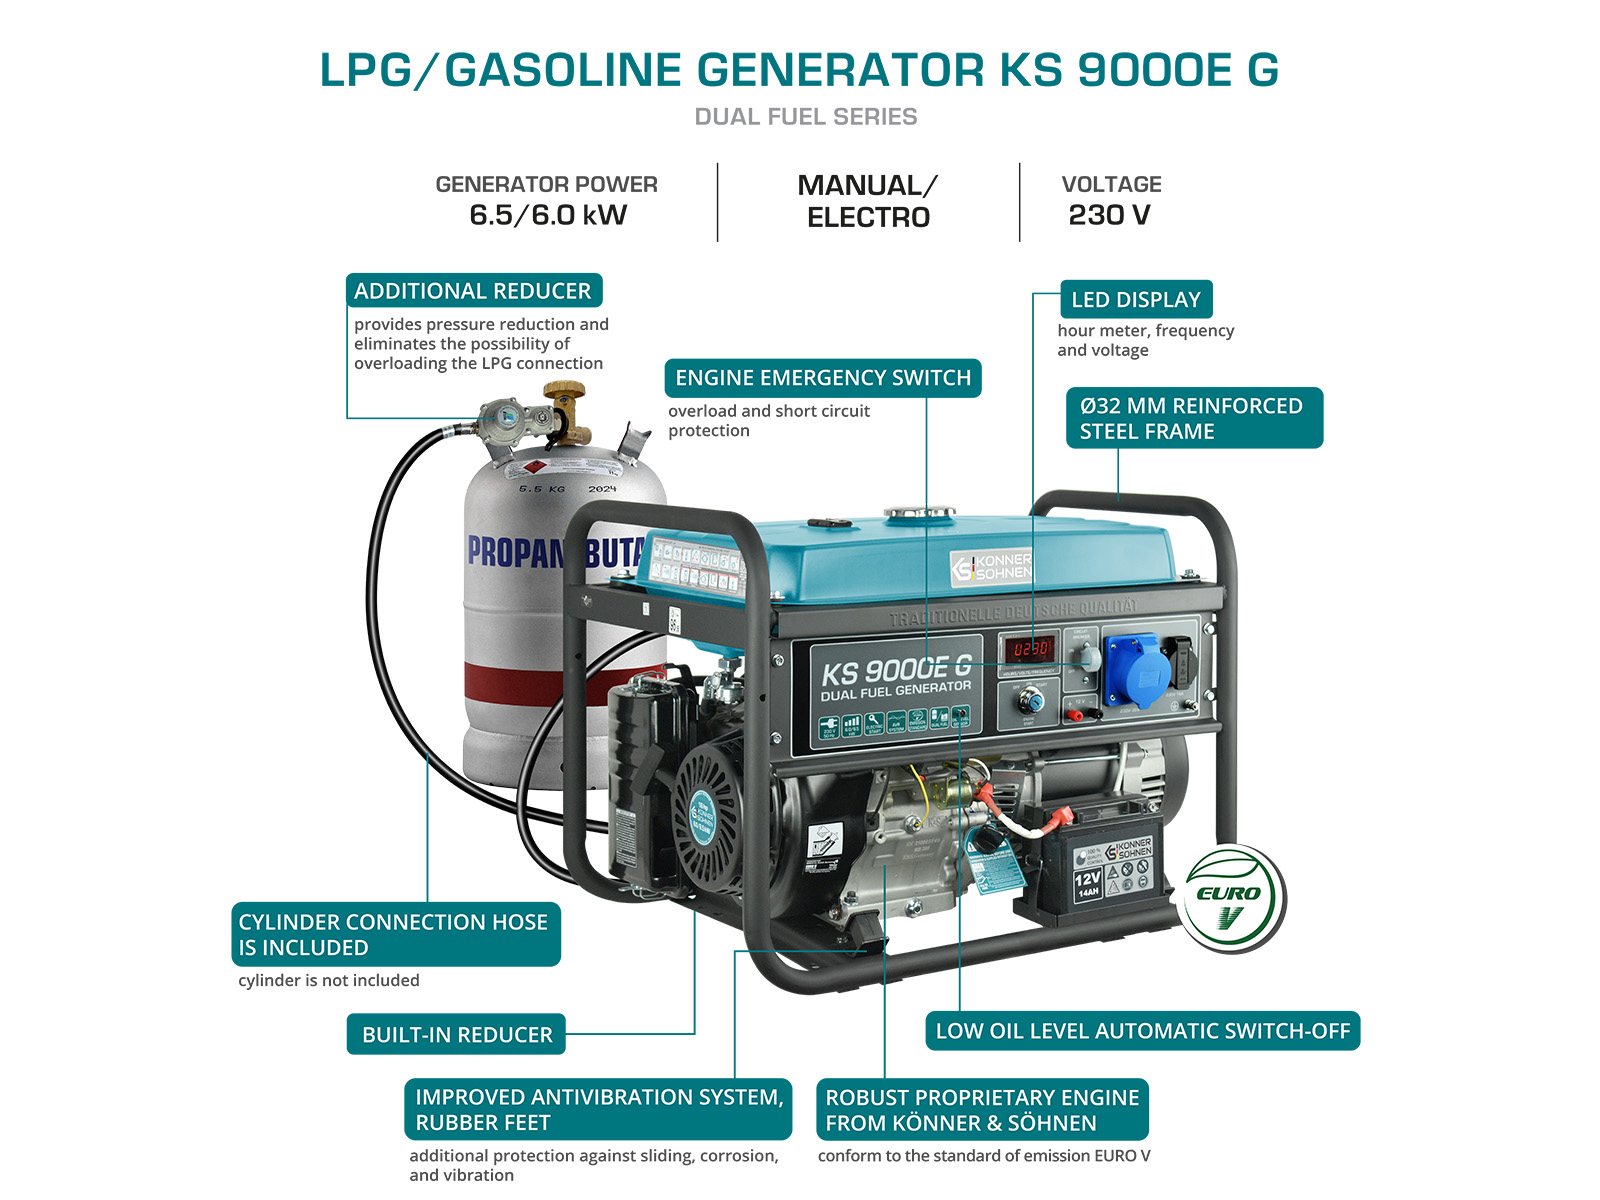 LPG/Gasoline Generator "Könner & Söhnen" KS 9000E G